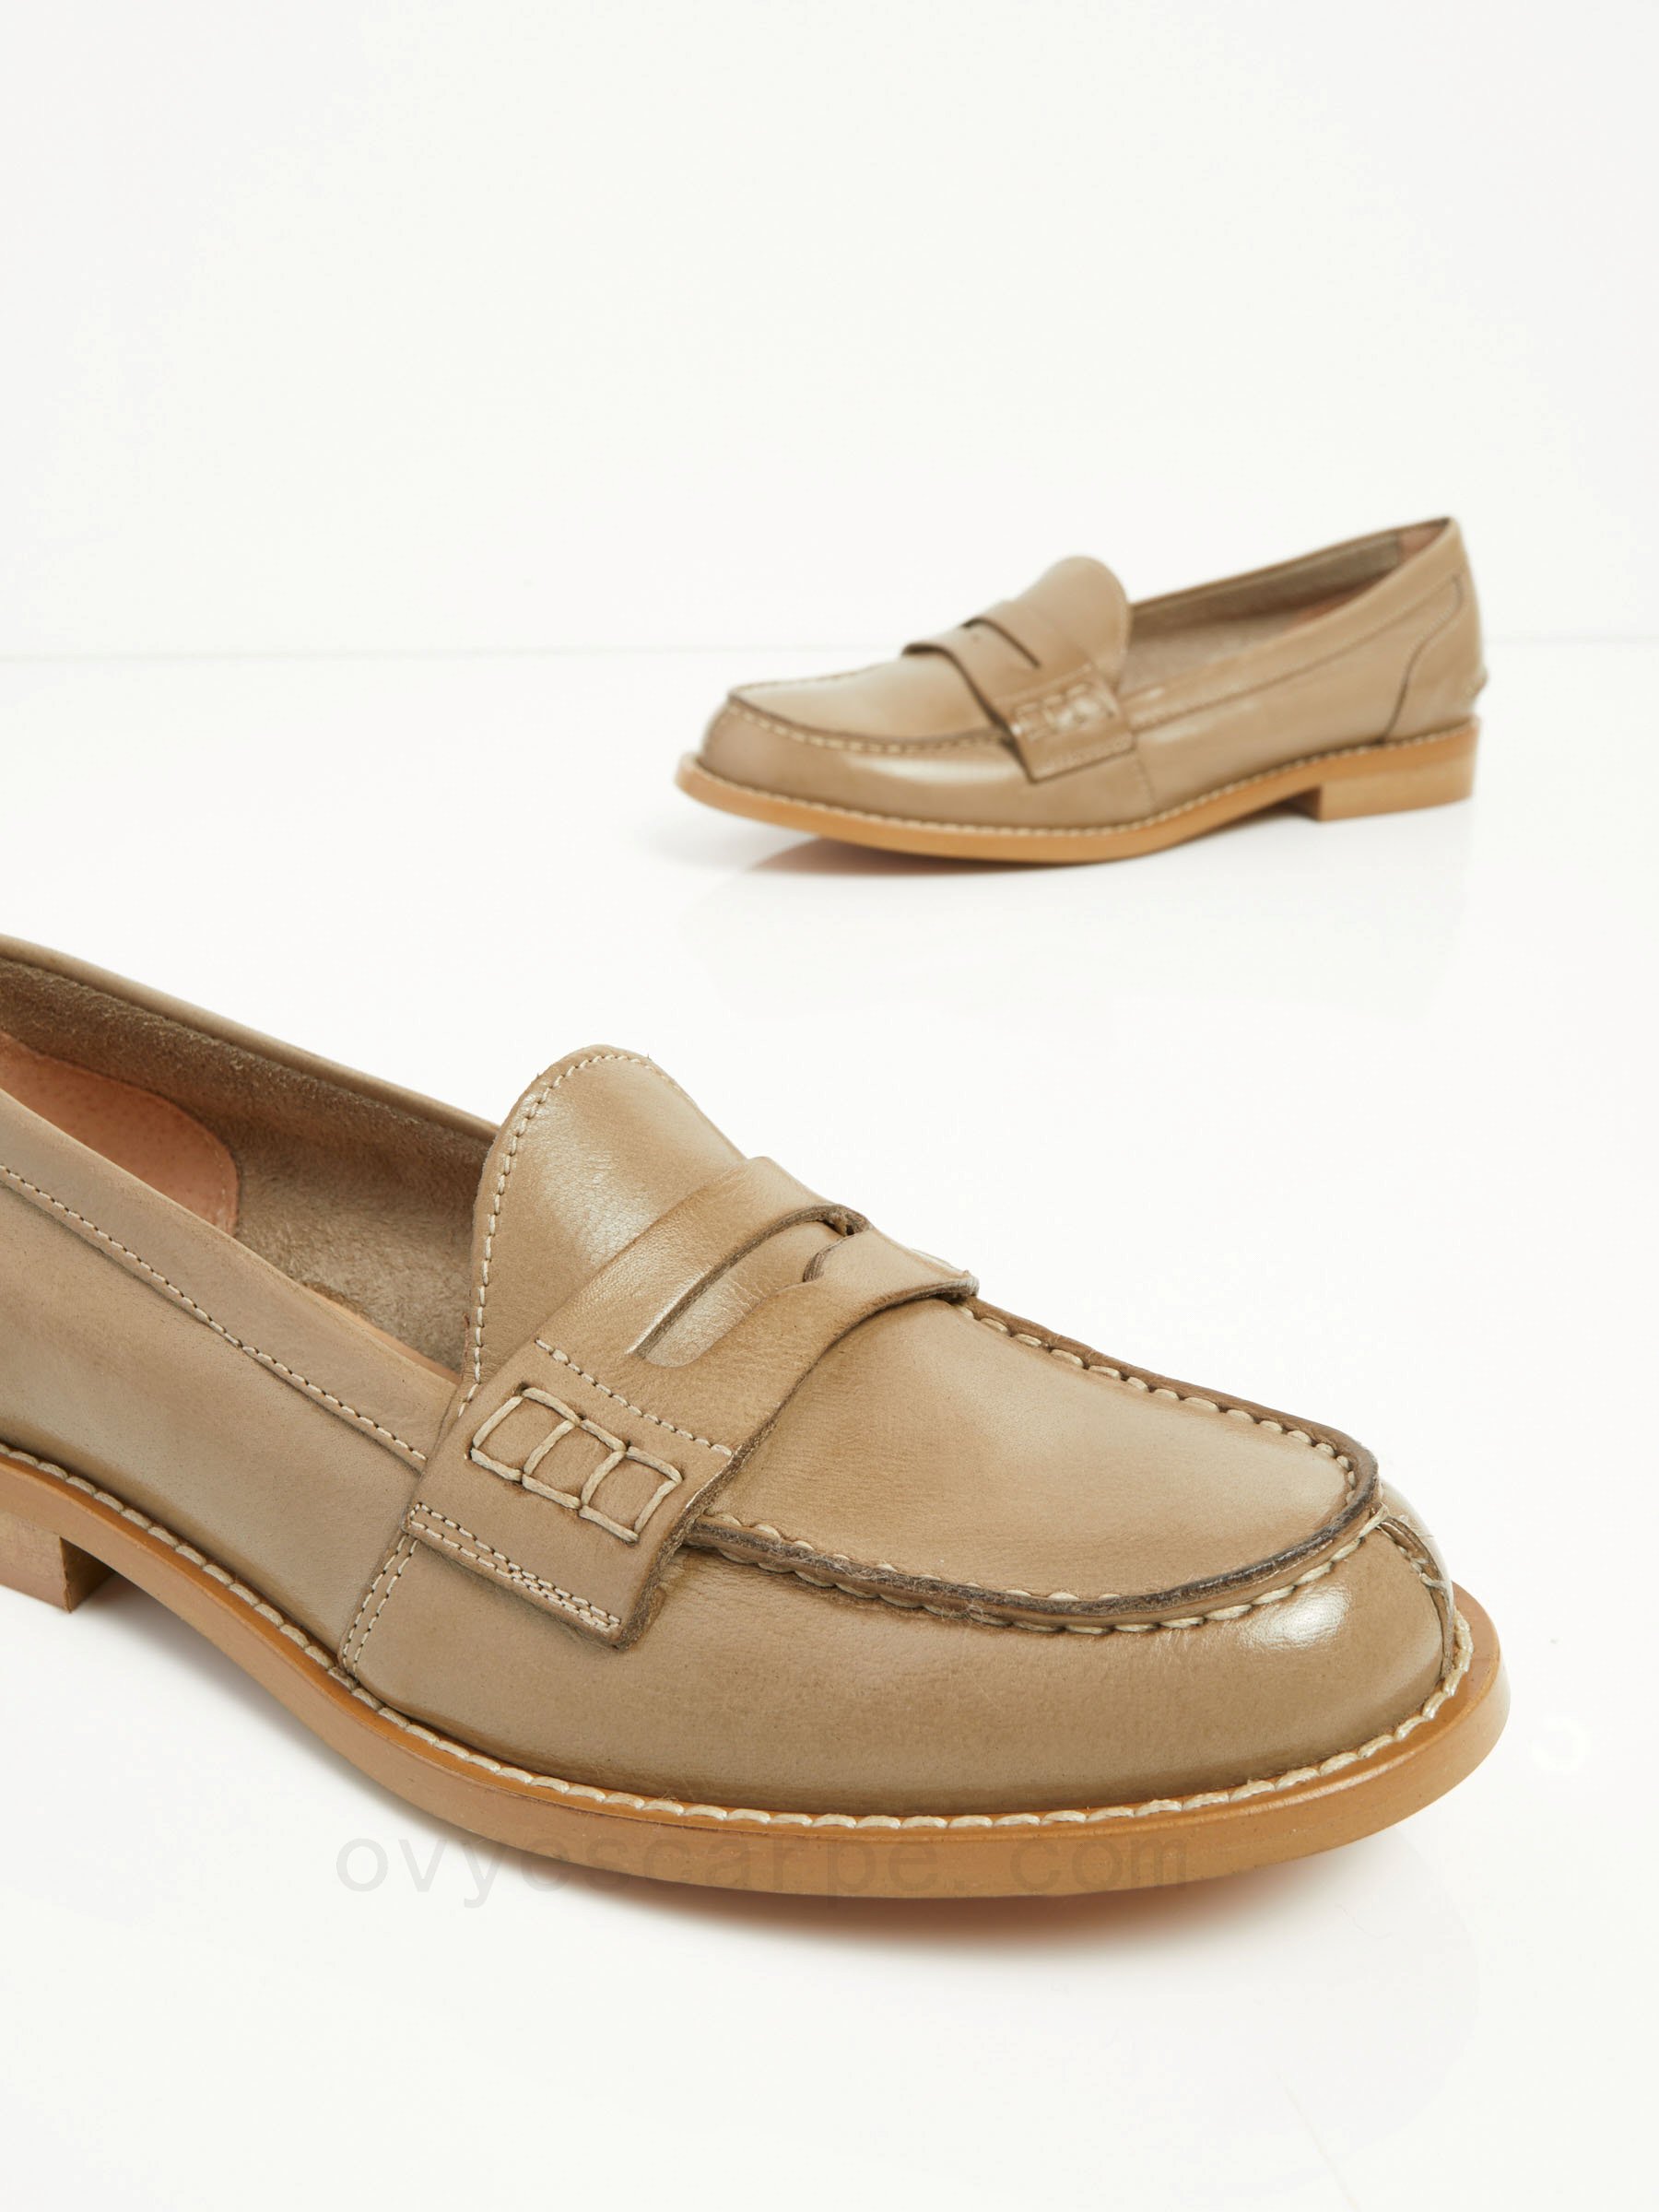 70% Di Sconto Leather Loafer F08161027-0432 Acquista Online